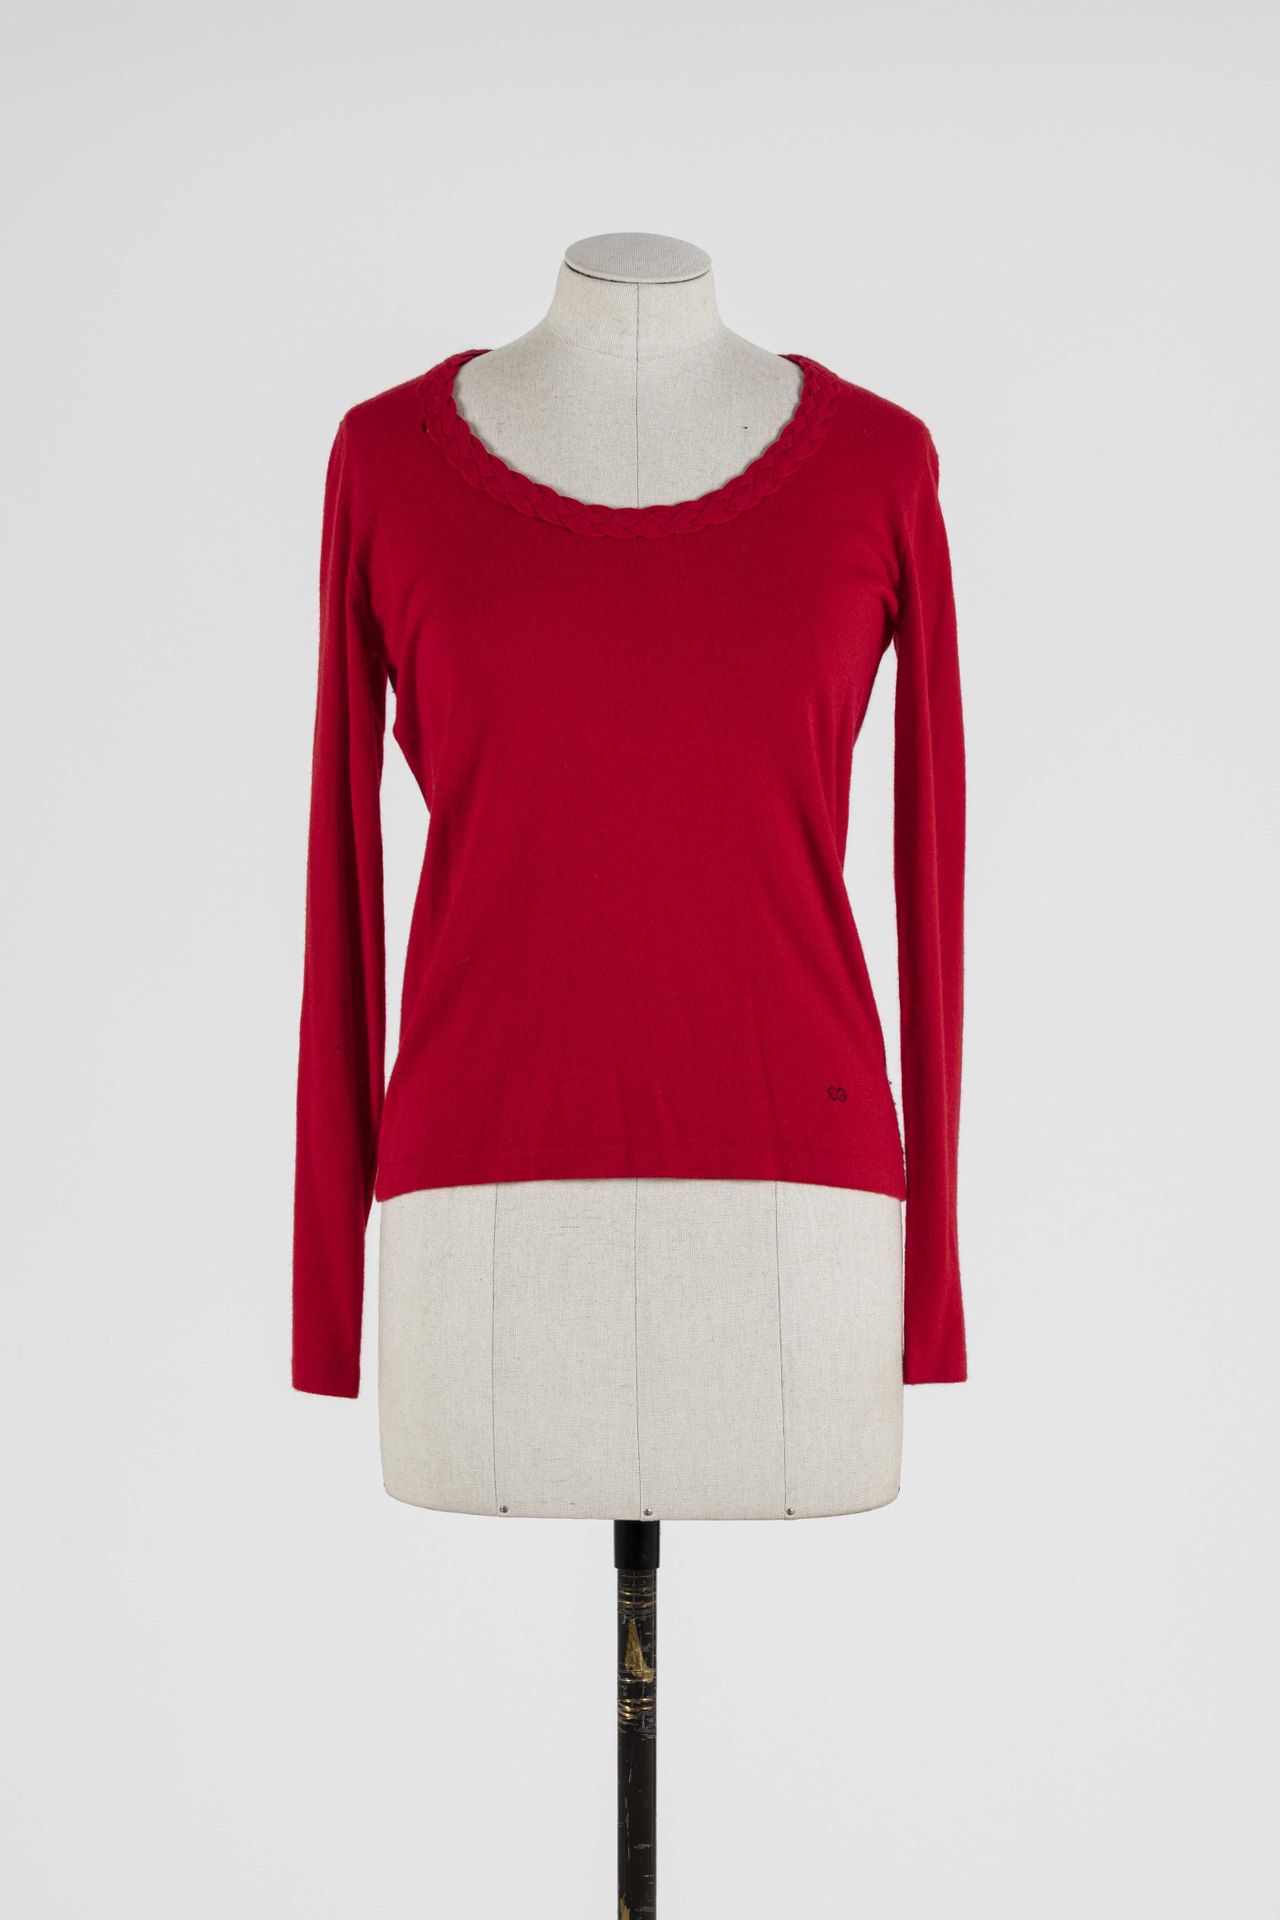 Null ESCADA Sport：红色羊毛和羊绒毛衣，圆领带辫子，长袖。

T.S

小孔